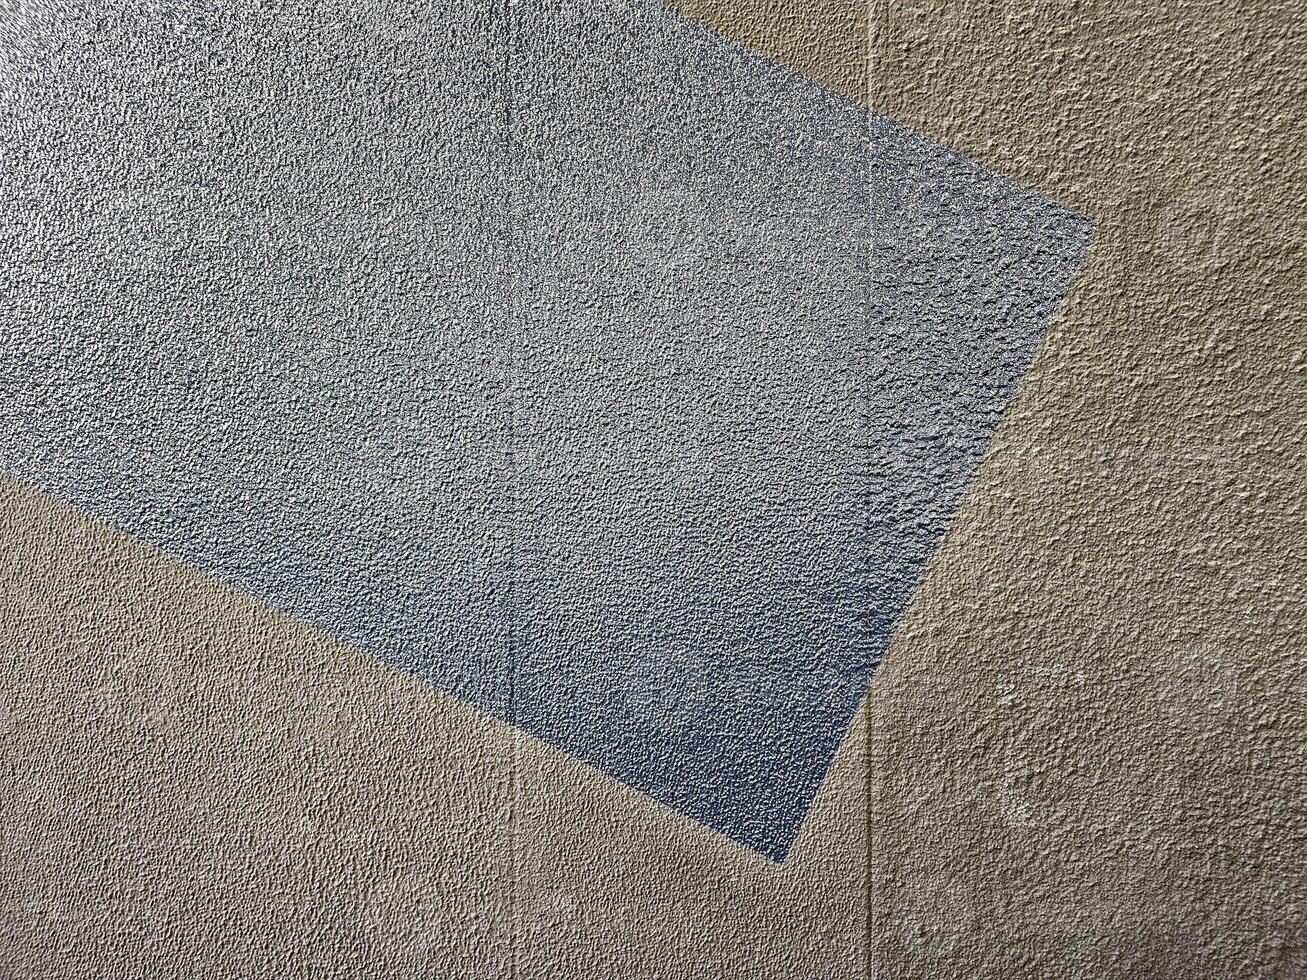 Blue Paintin on Grunge Stucco Wall Background. photo